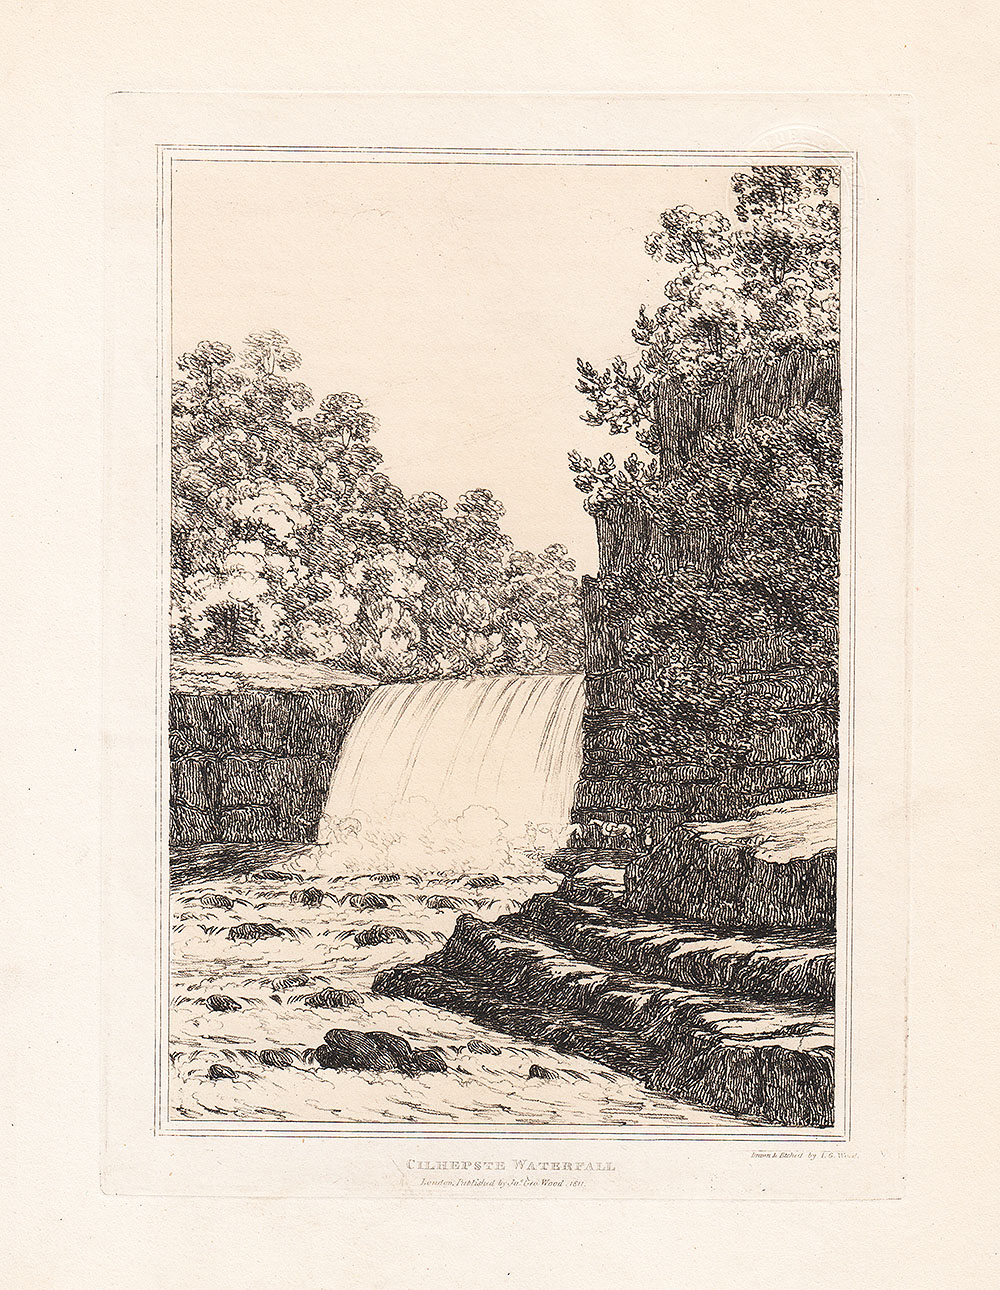 Cilhepste Waterfall